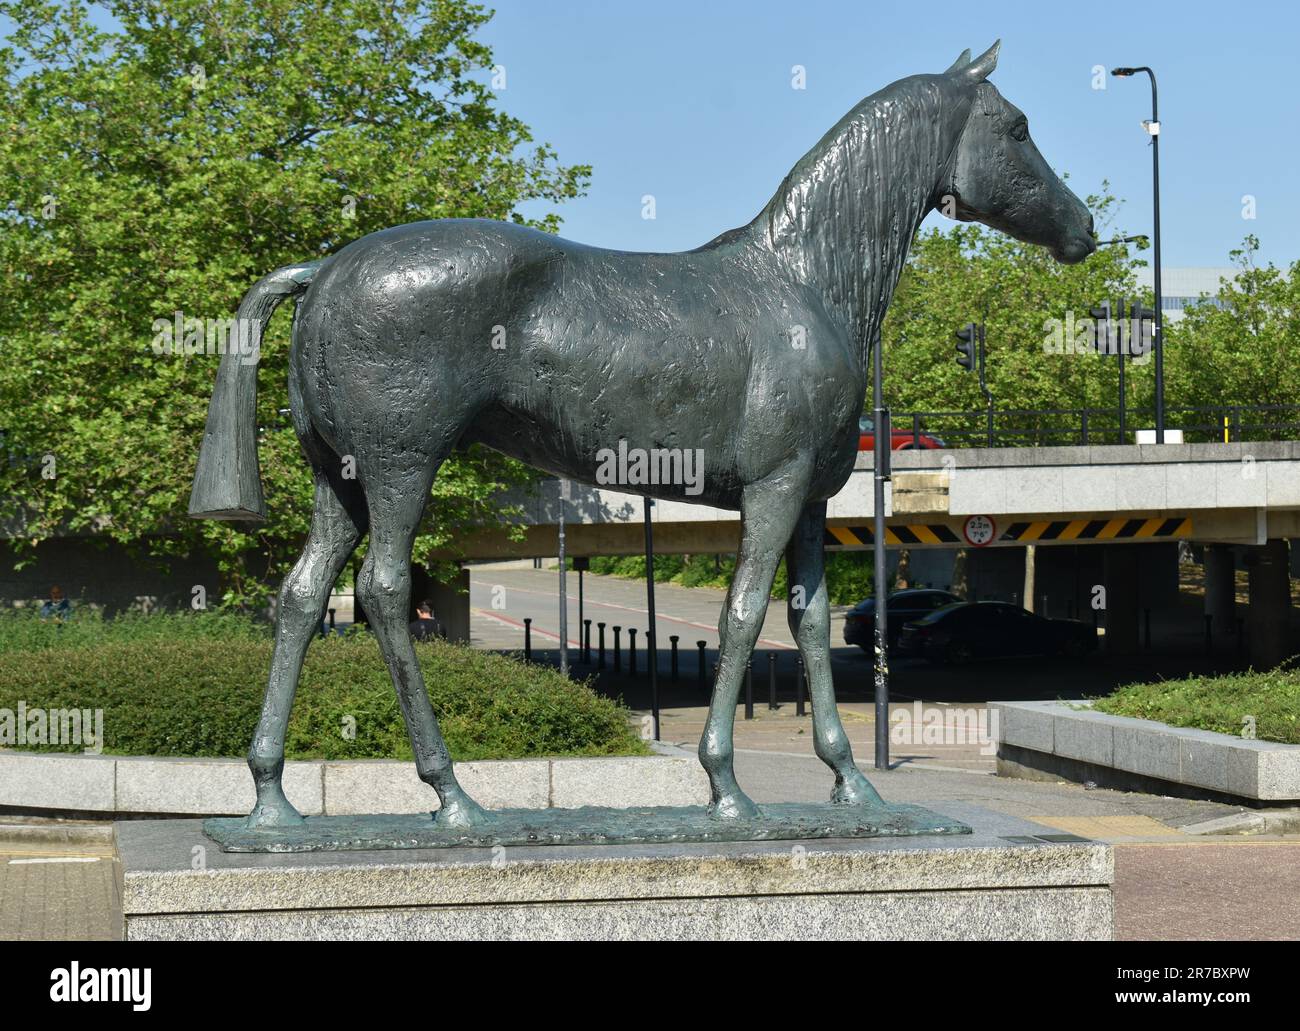 The Black Horse sculpture at Lloyds Court, Milton Keynes.  This is a bronze lifesize sculpture by Elisabeth Frink. Stock Photo